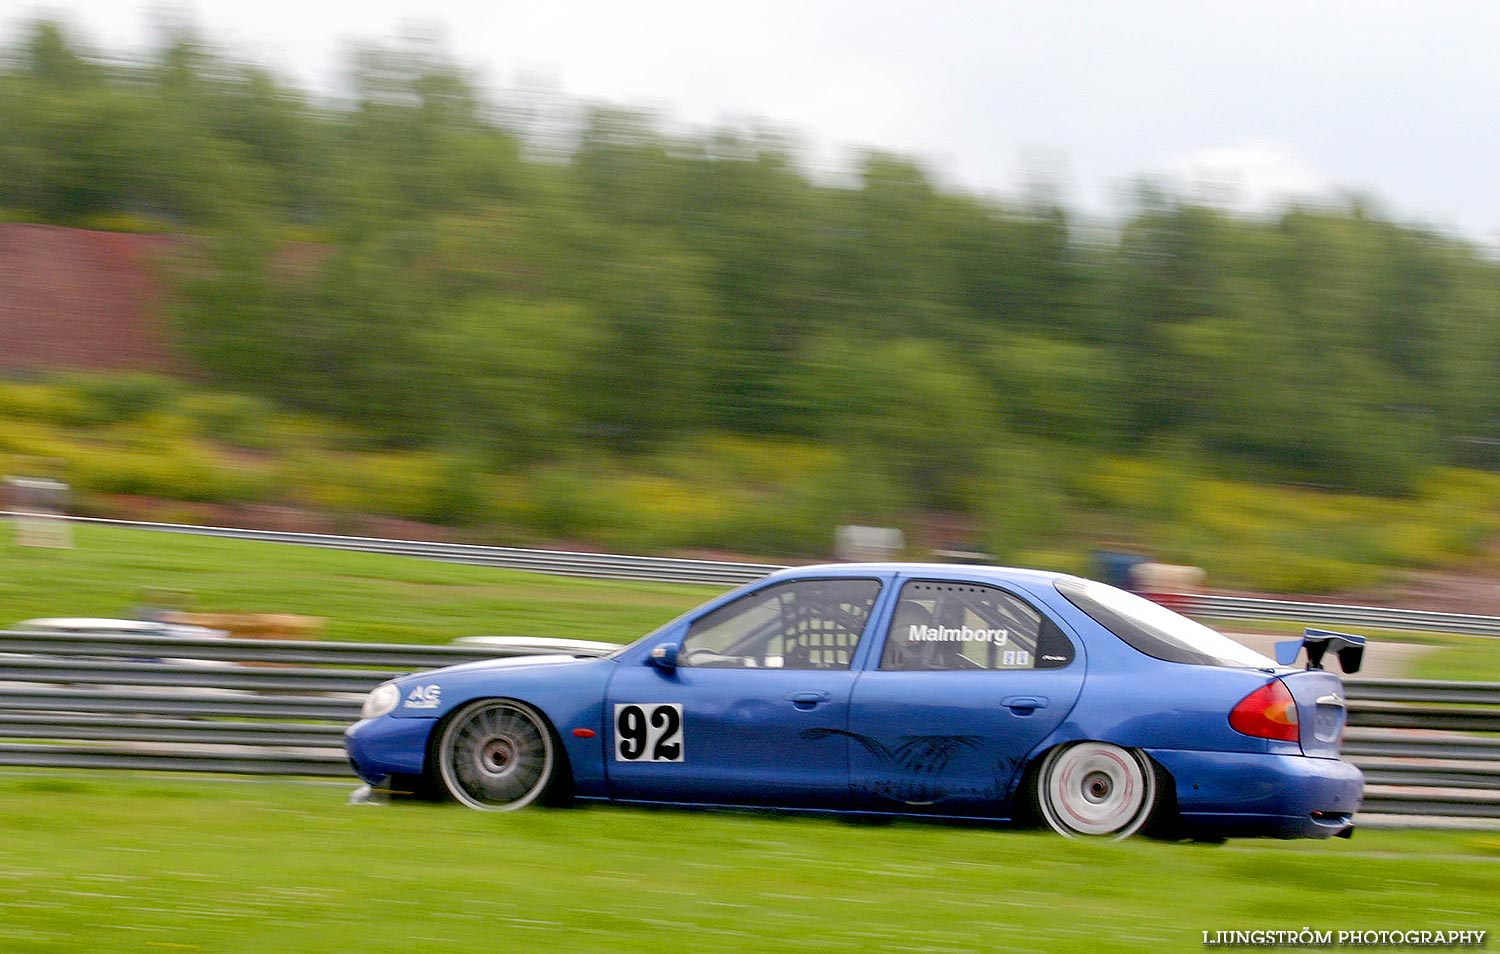 SSK Raceweek,mix,Kinnekulle Ring,Götene,Sverige,Motorsport,,2004,92424